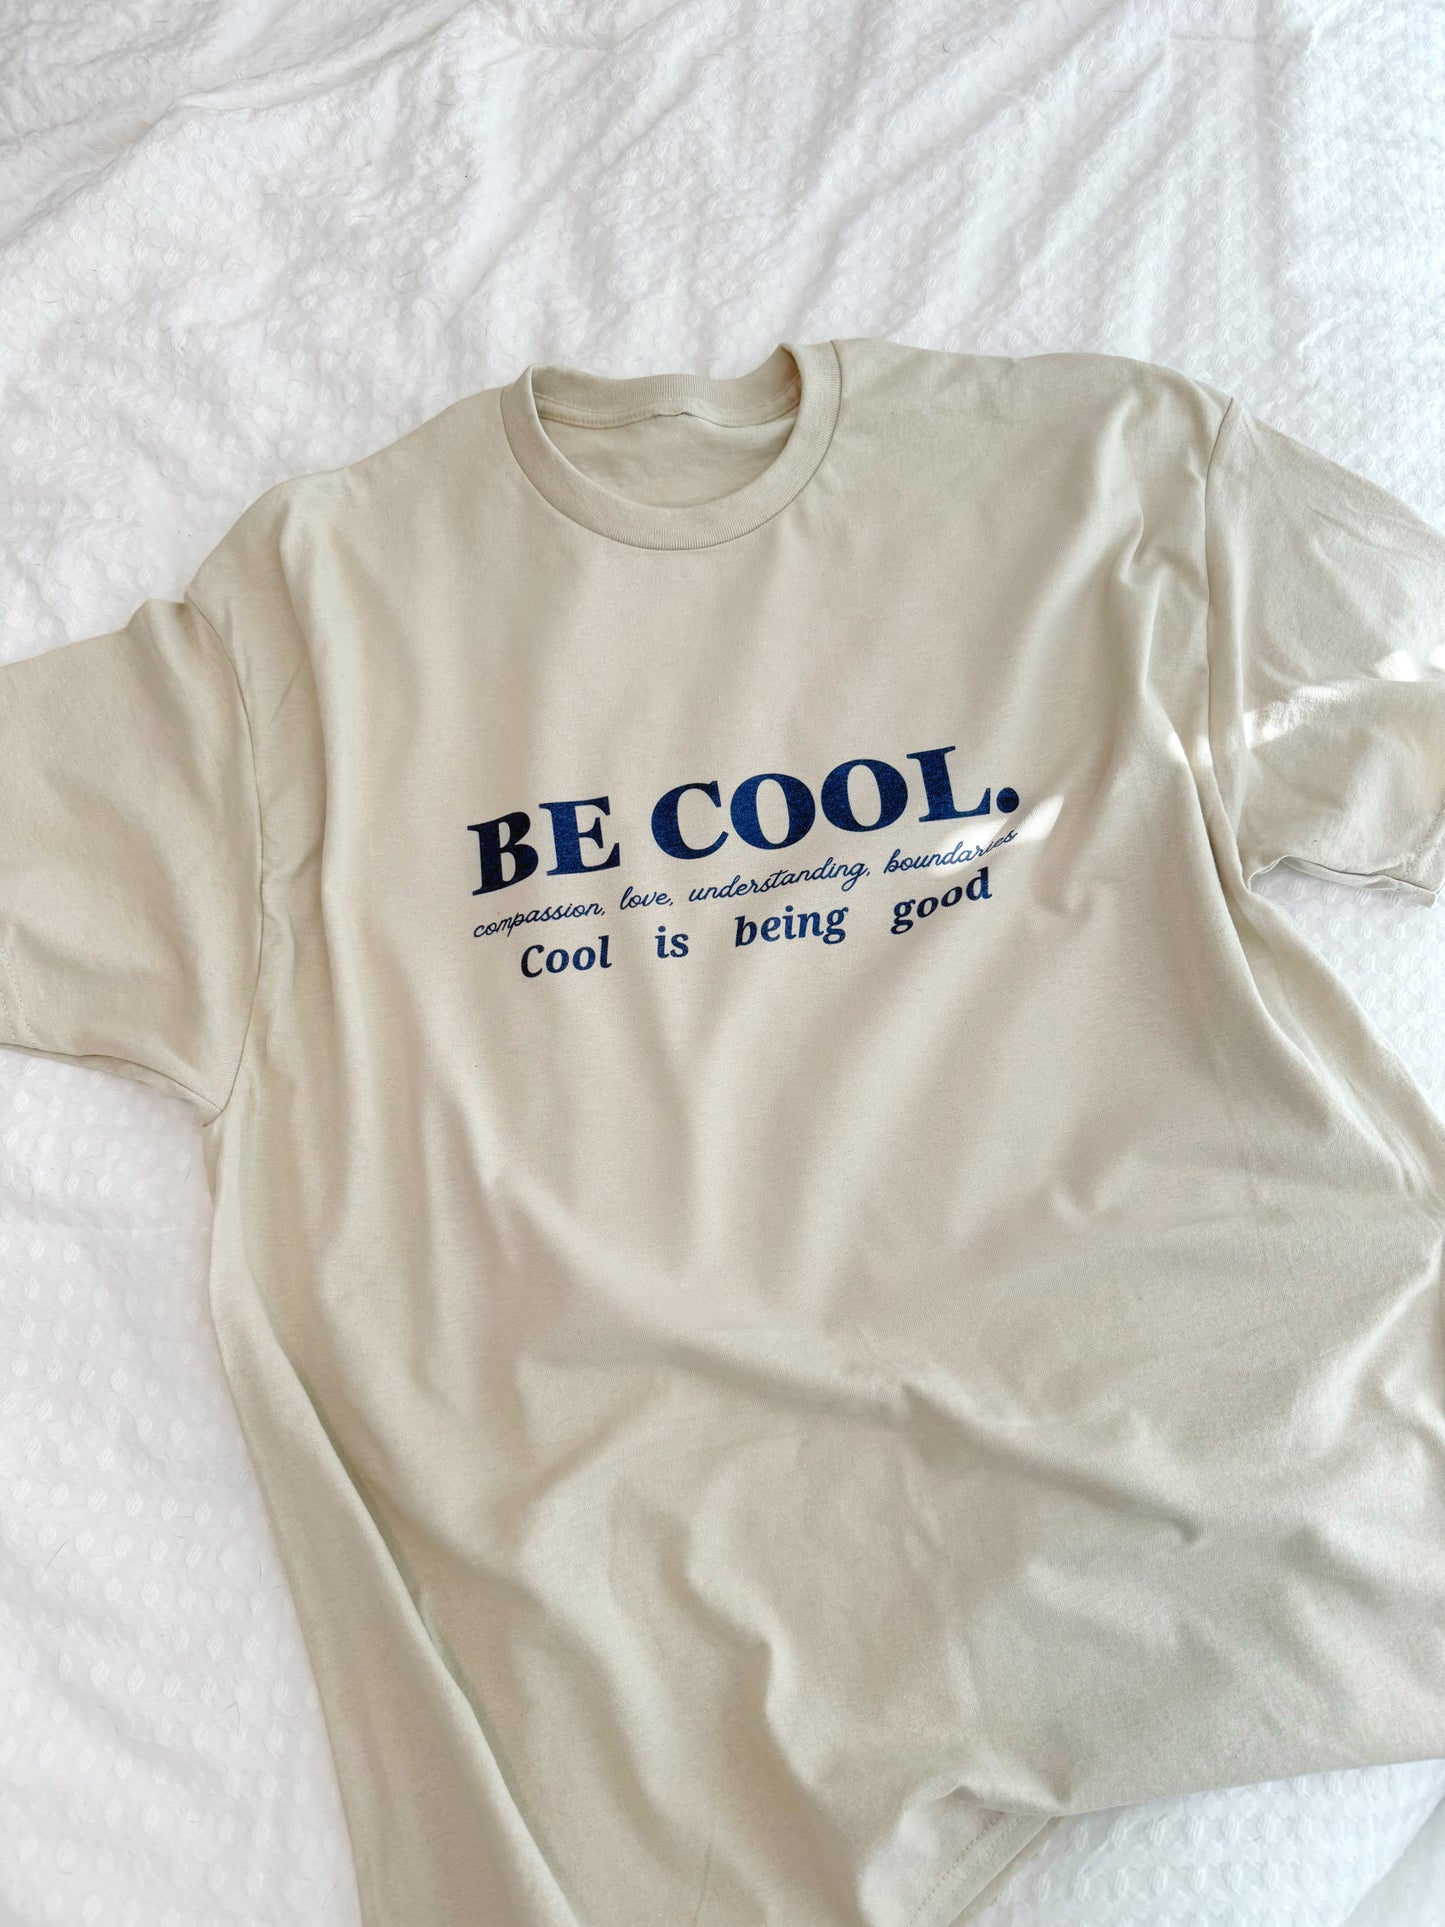 Be Cool T-shirt